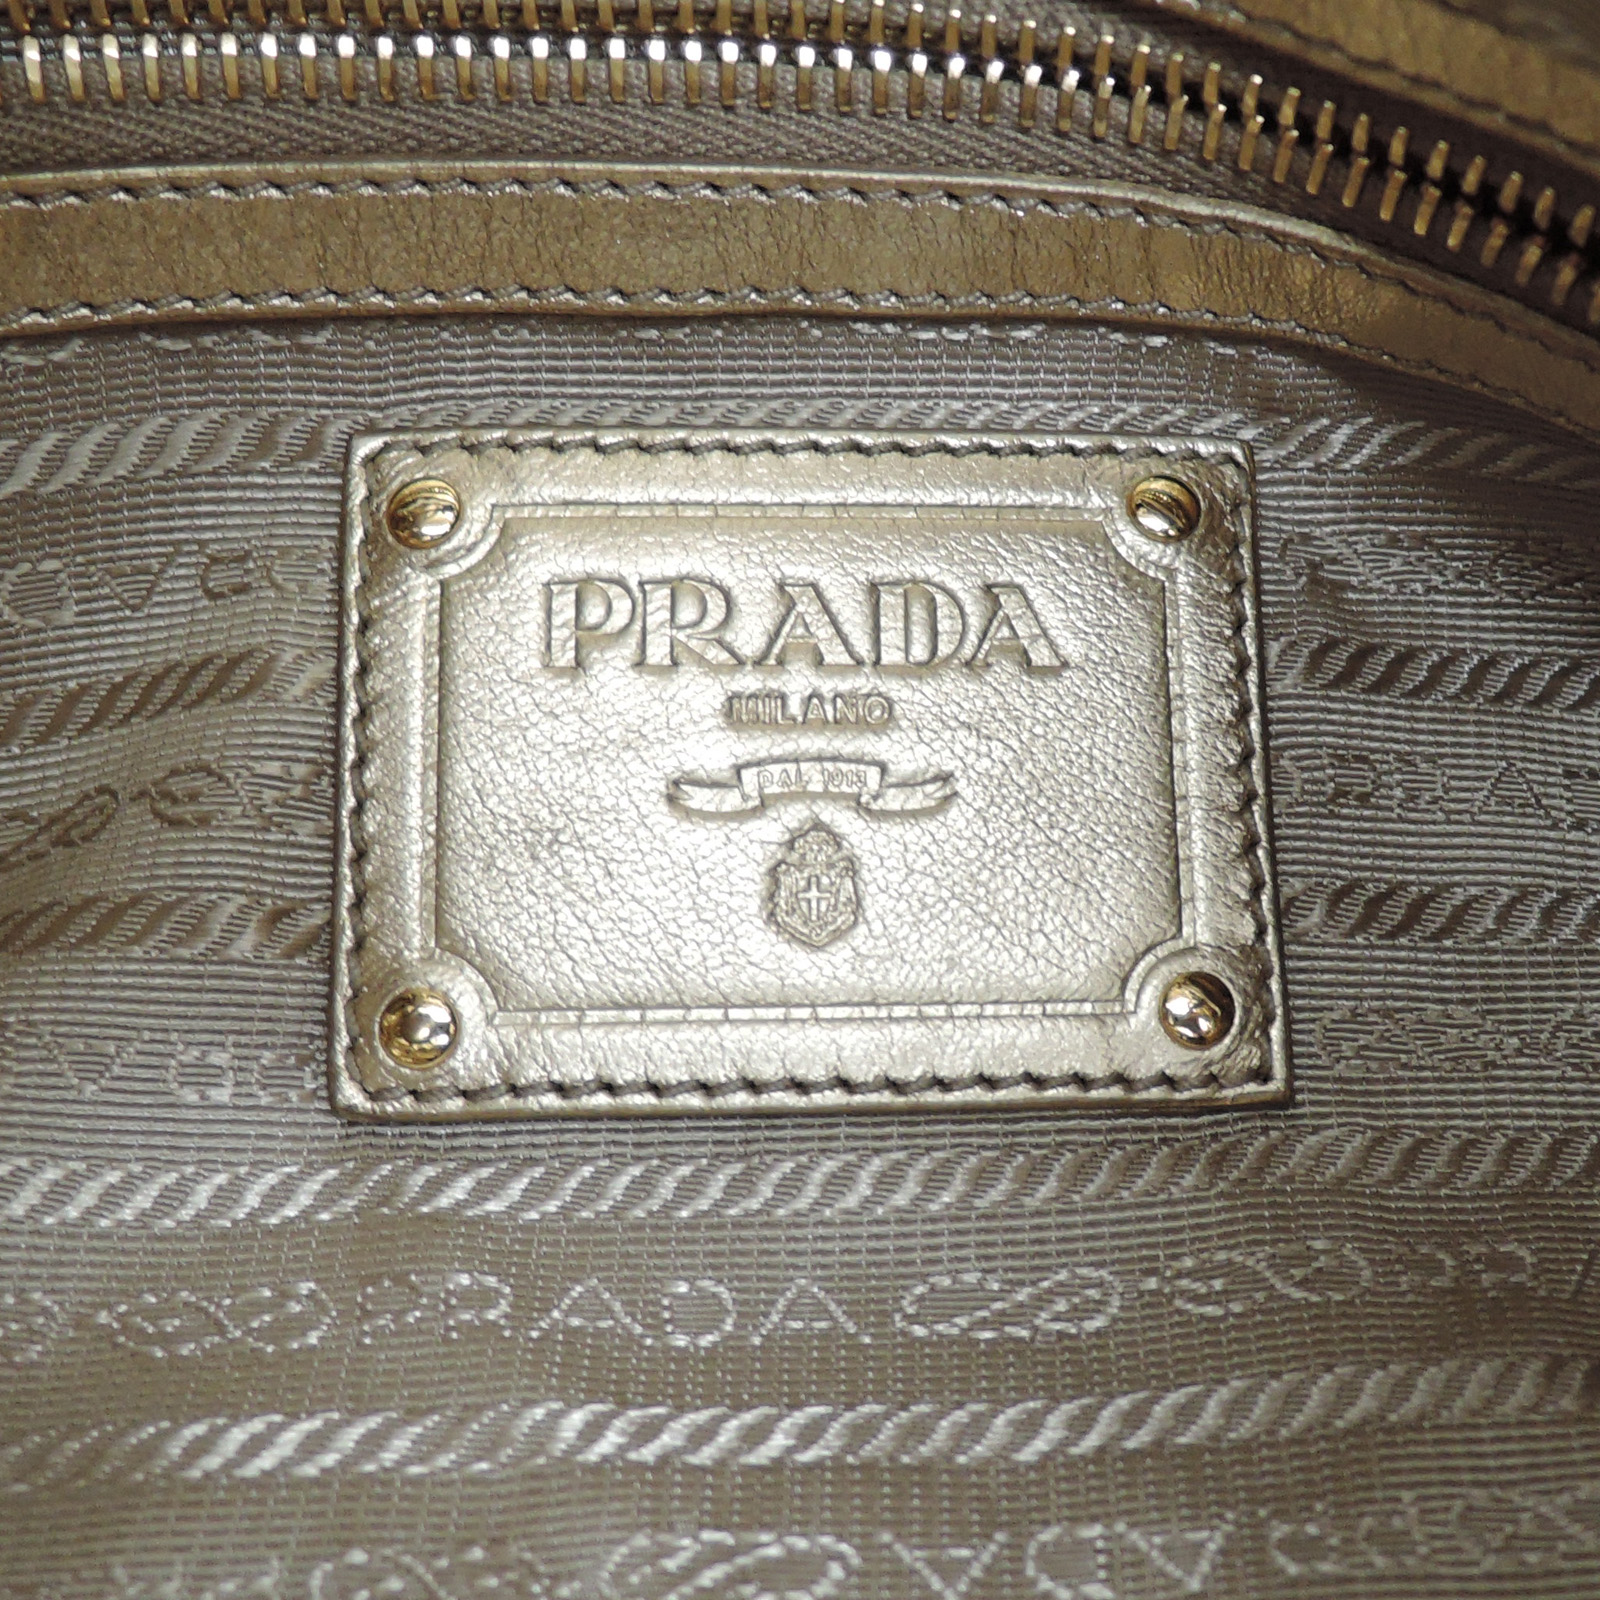 Rise-on PRADA Metallic Leather Gold Shoulder bag Handbag #21 | eBay